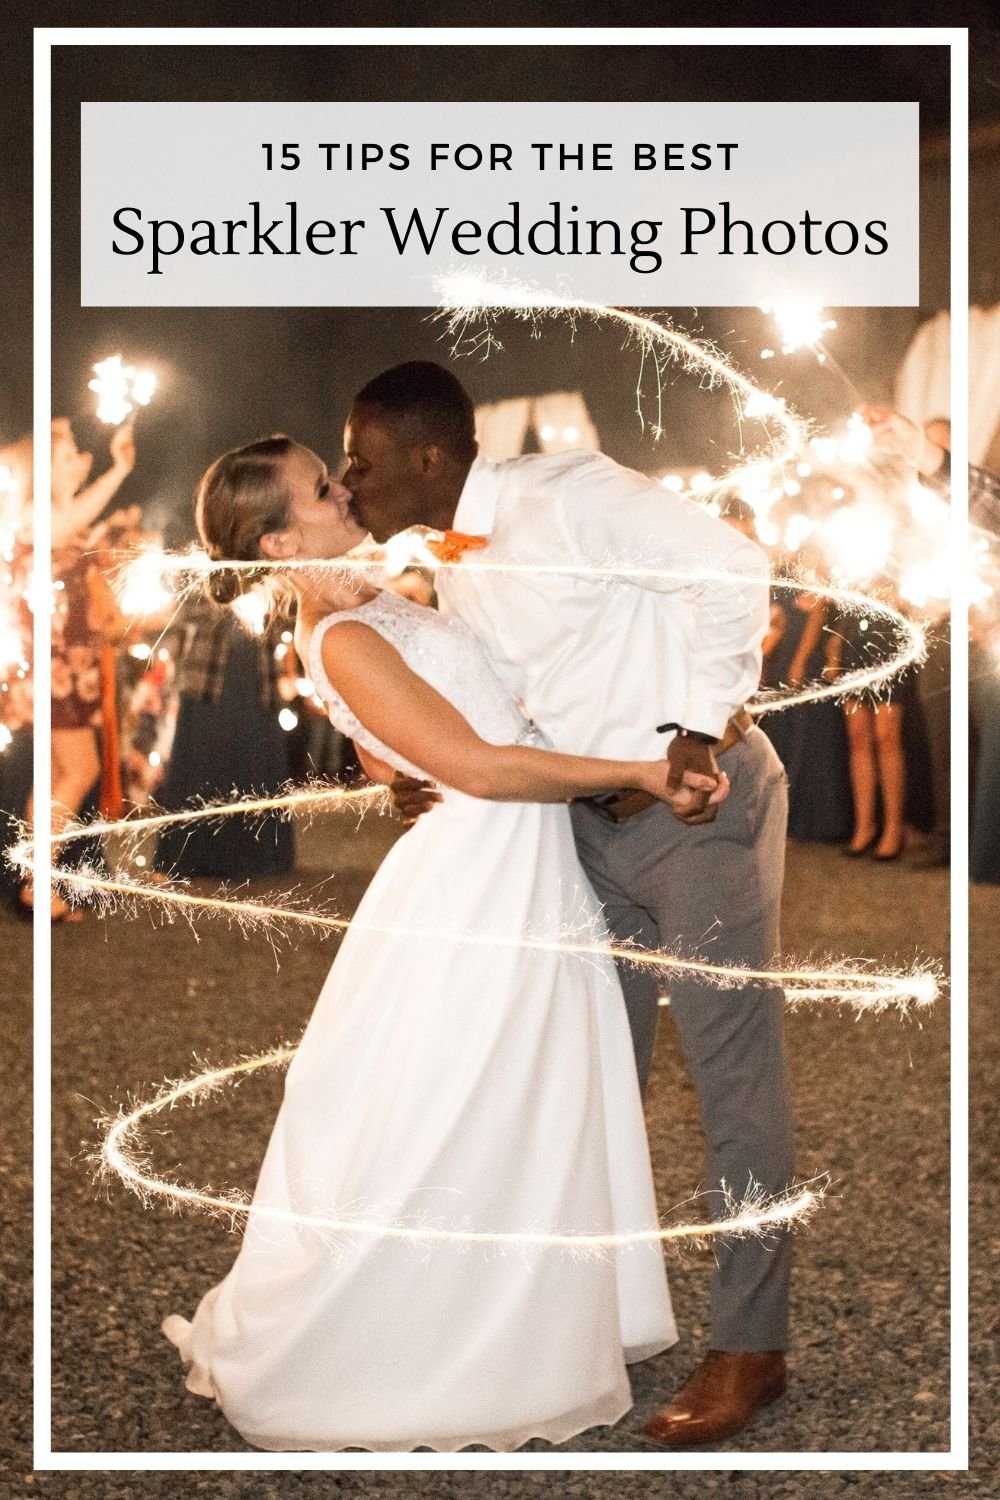 sparkler wedding photo tips.jpg